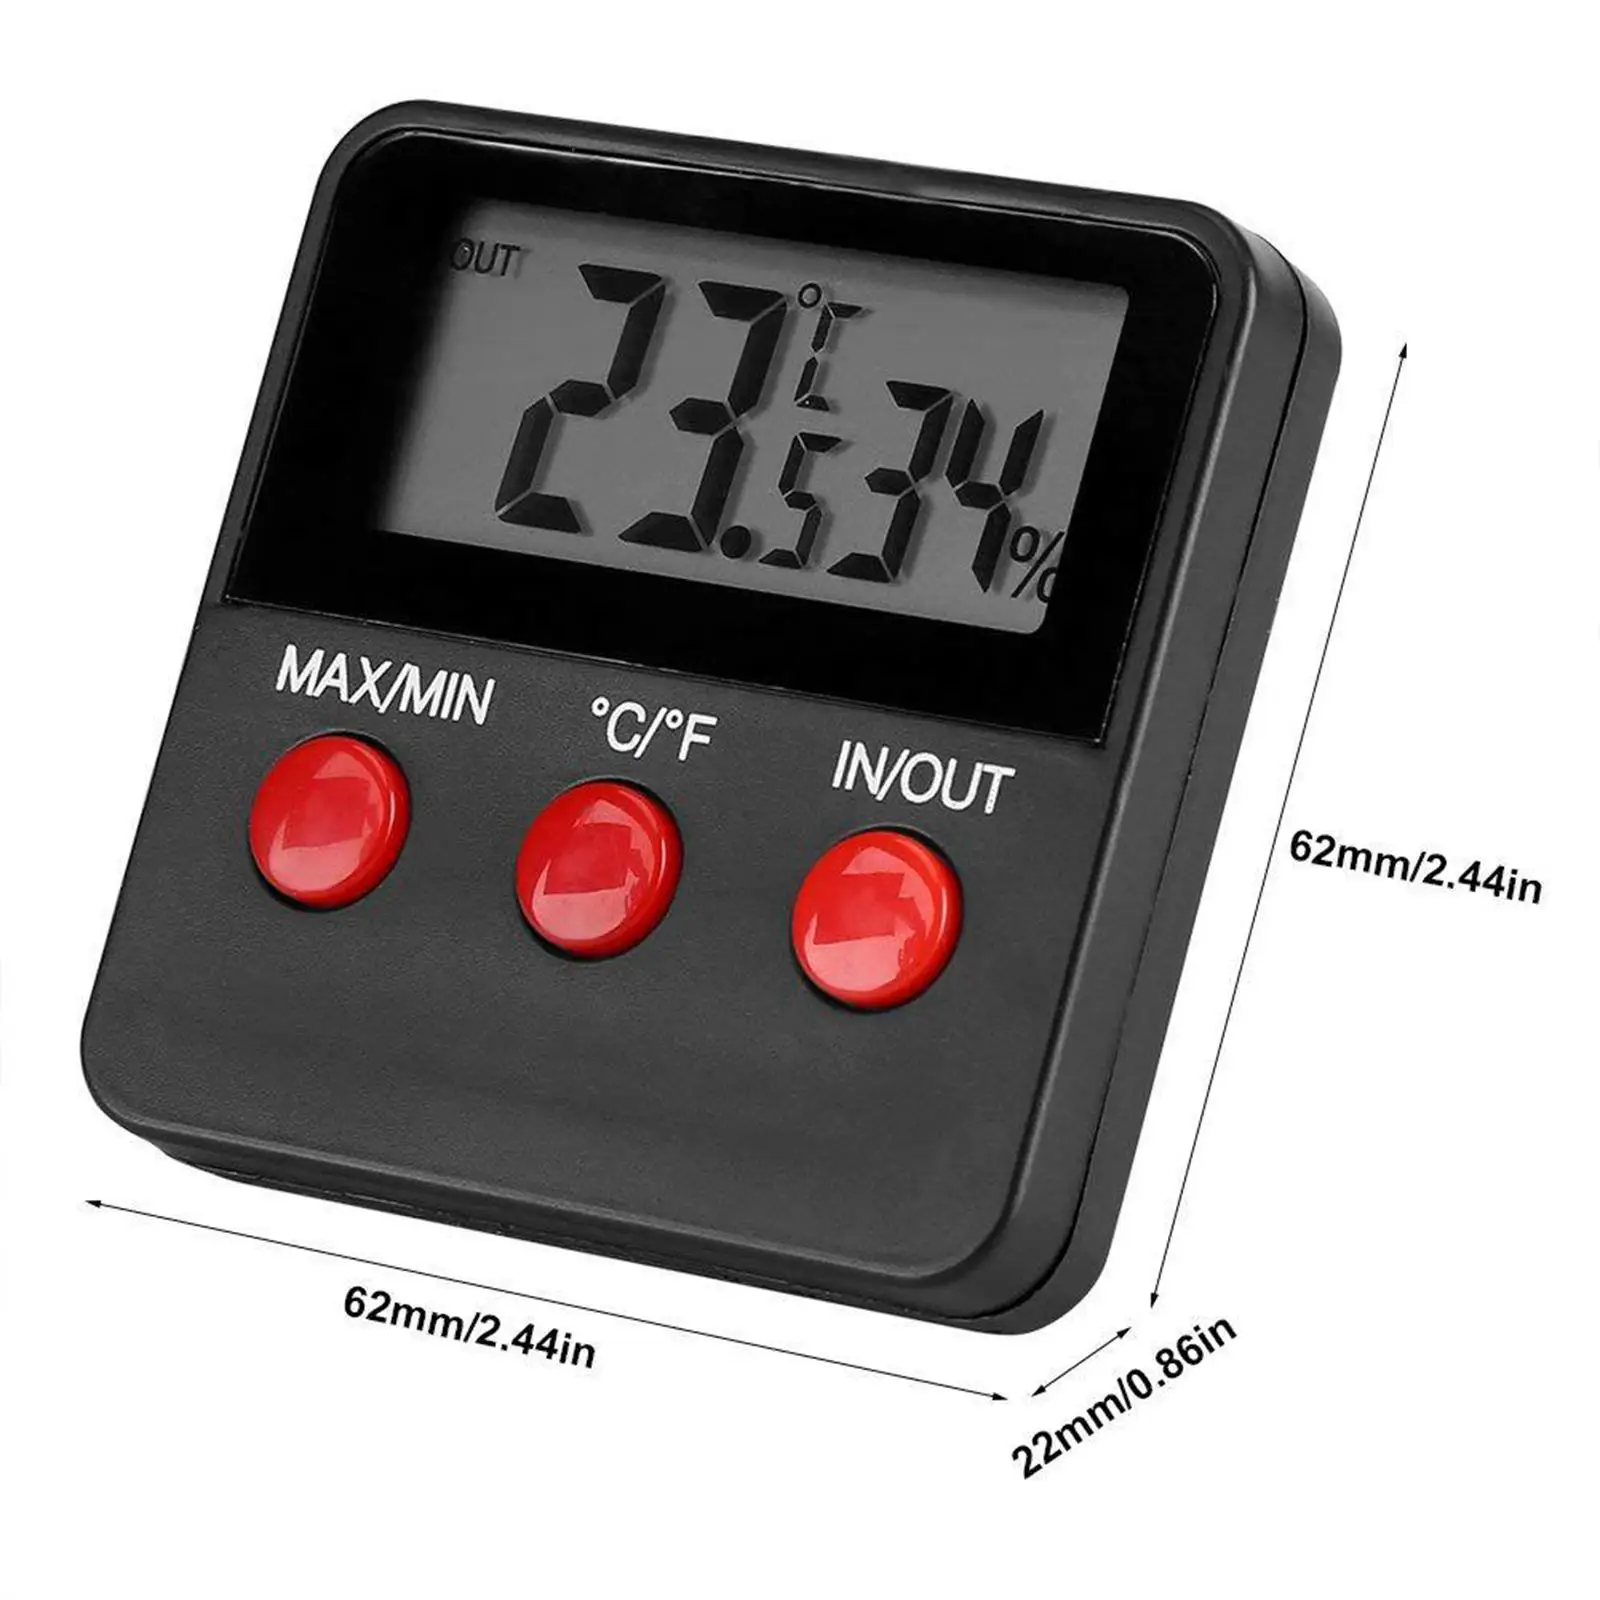 Mini Digital Reptile Thermometer with Probe Temperature Hygrometer for Frog